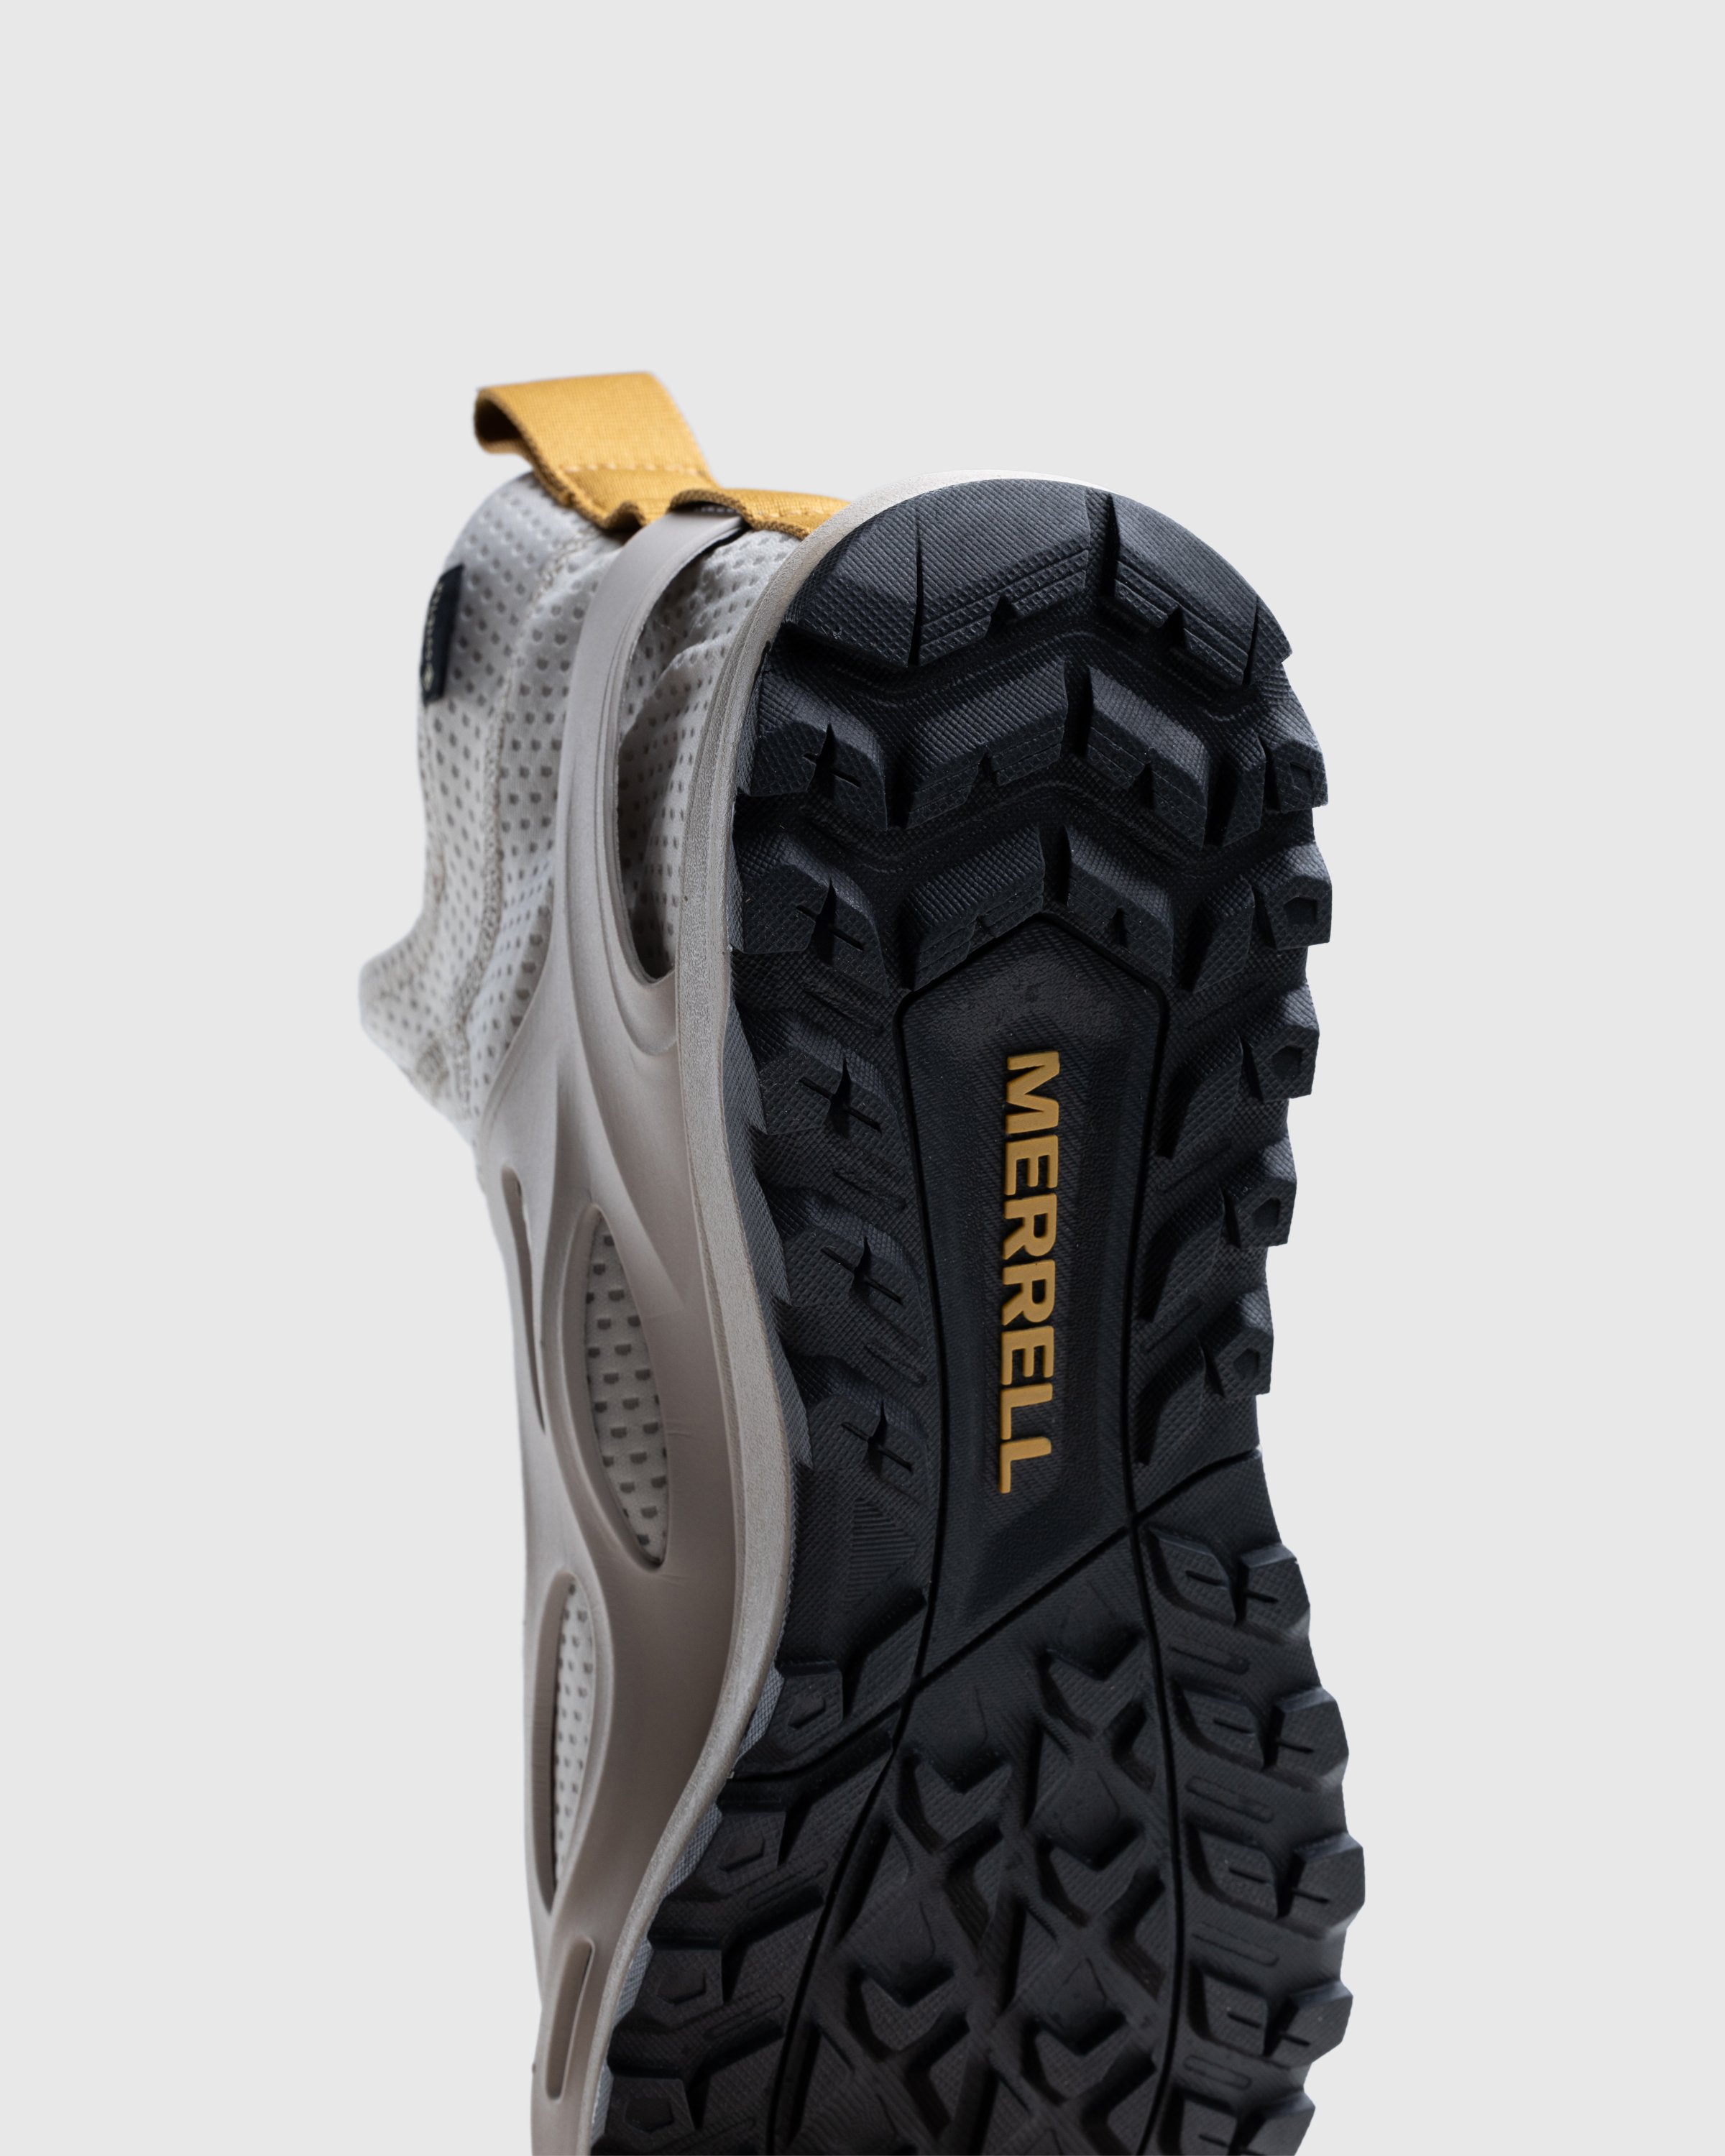 Merrell - Hydro Runner Mid GORE-TEX Moonbeam - Footwear - Yellow - Image 6